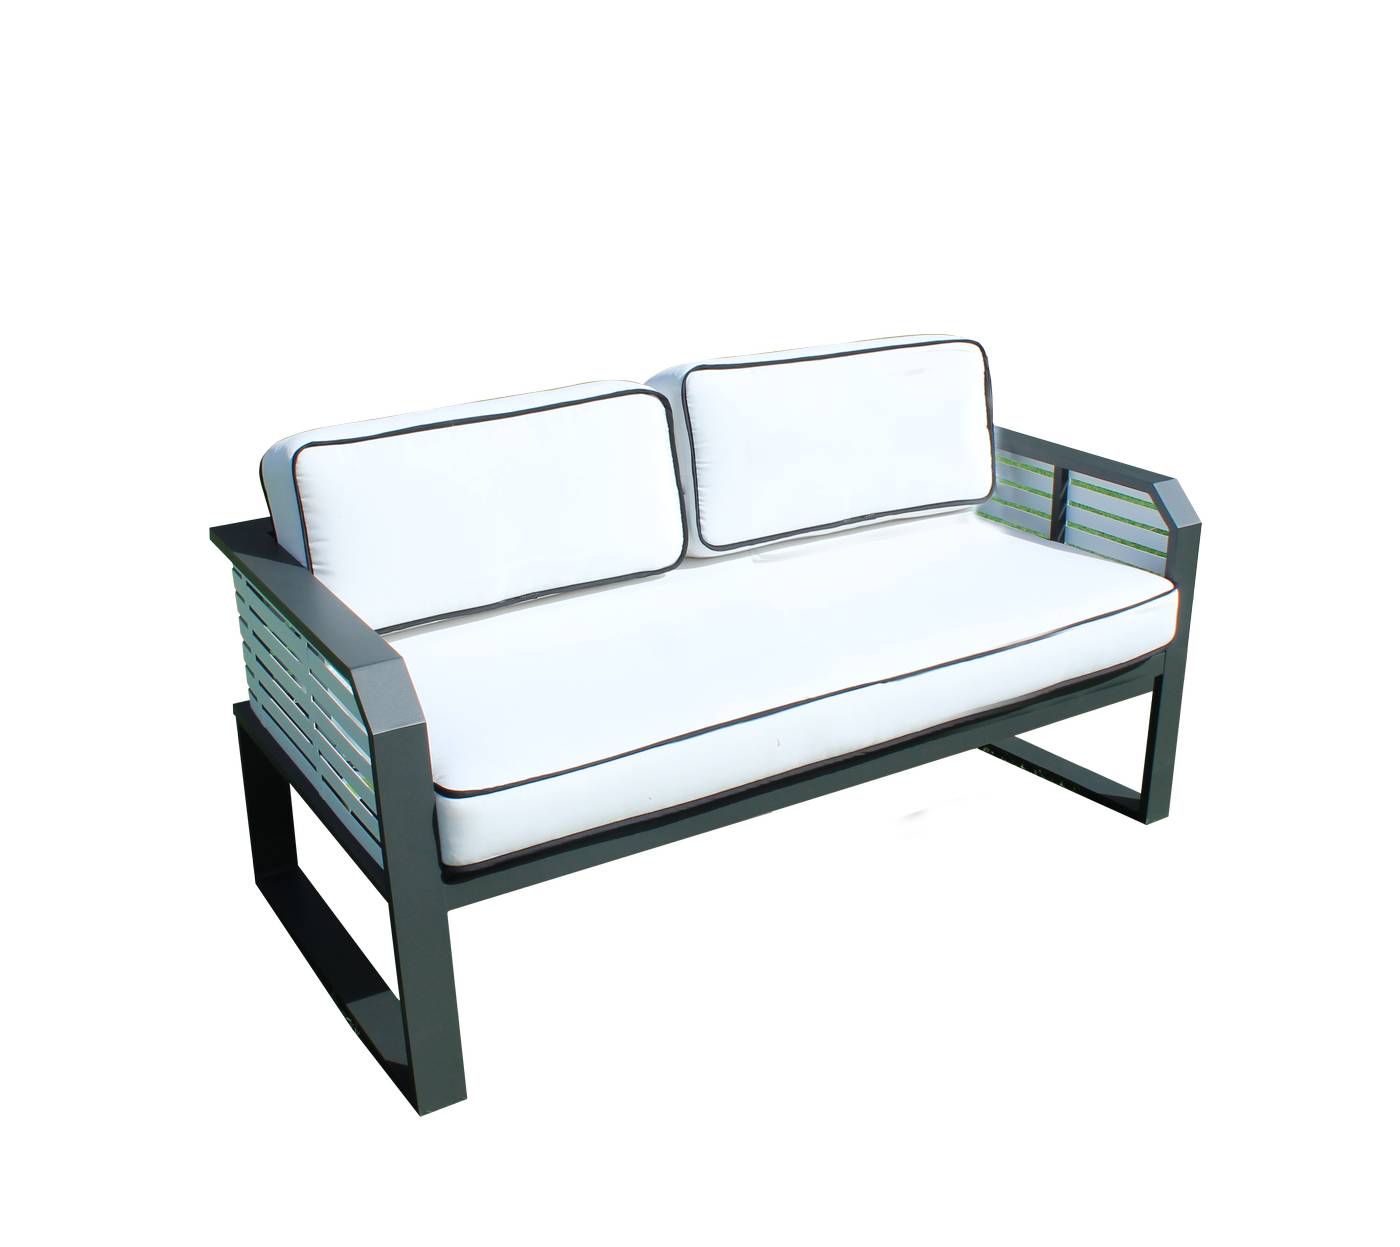 Set Aluminio Sira-7 - Coqueto conjunto de alumnio bicolor: 1 sofá de 2 plazas + 2 sillones + 1 mesa de centro.